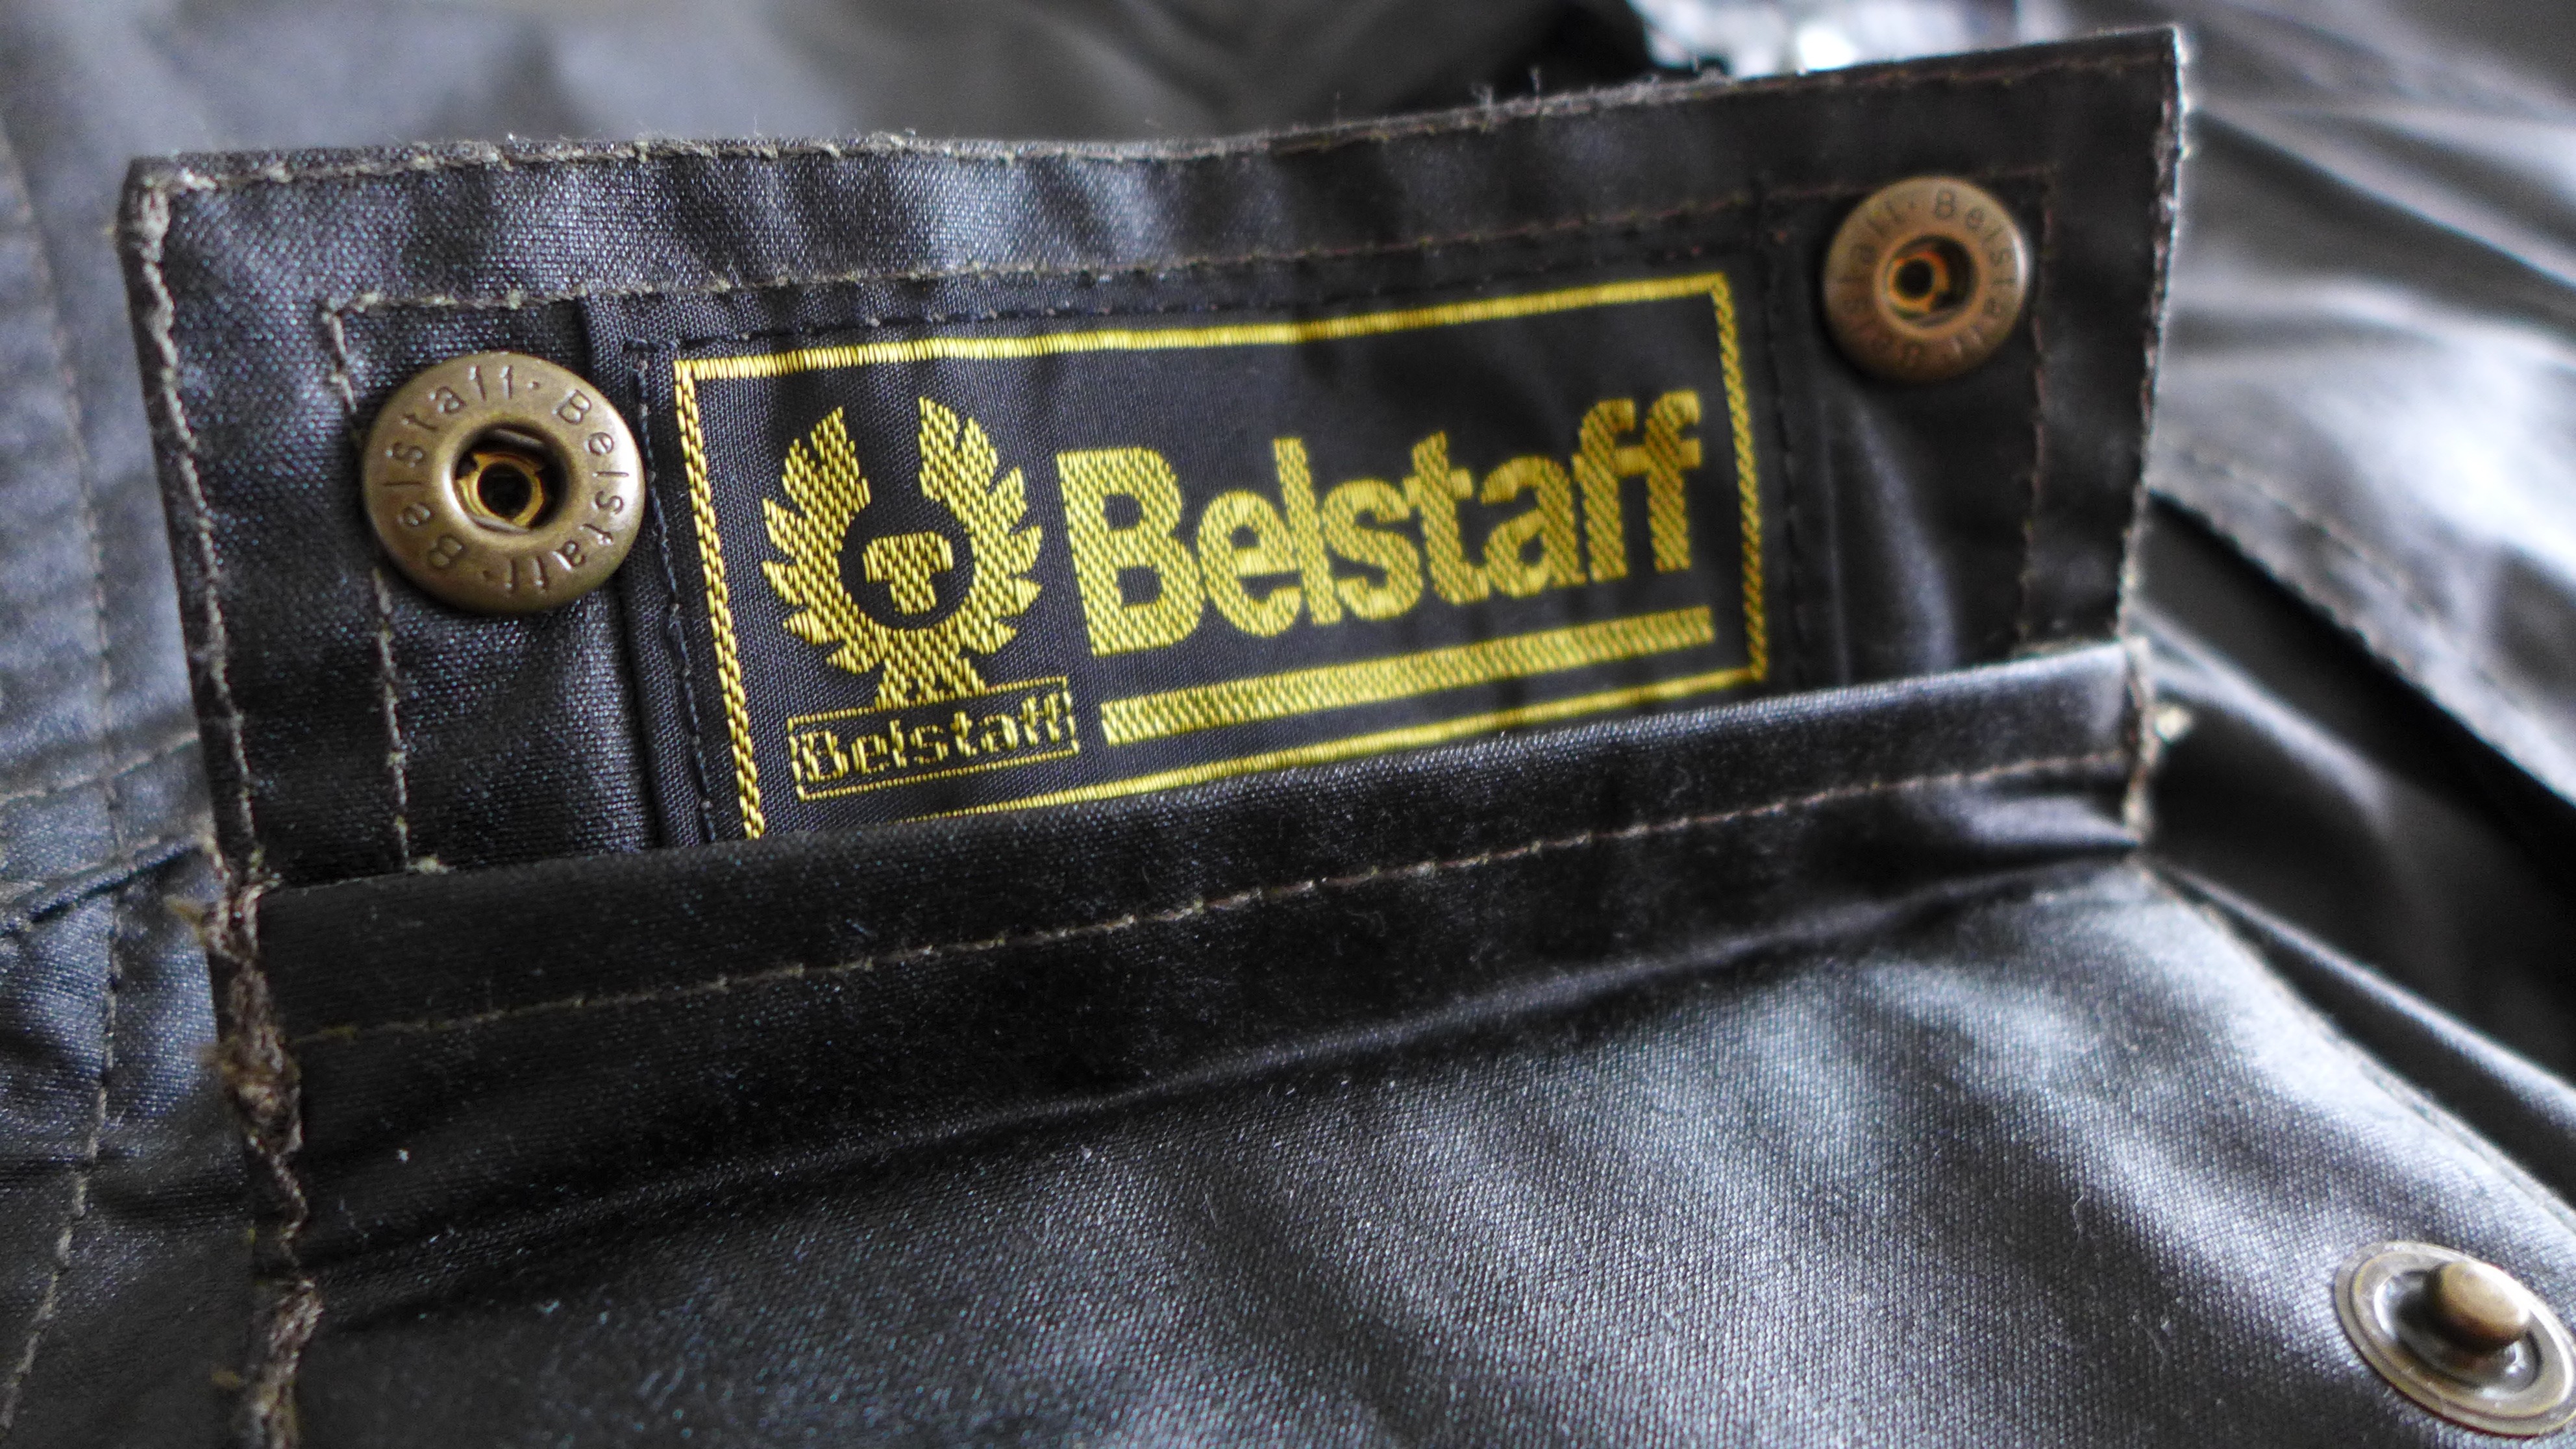 Belstaff from eBay - real or fake? | Styleforum